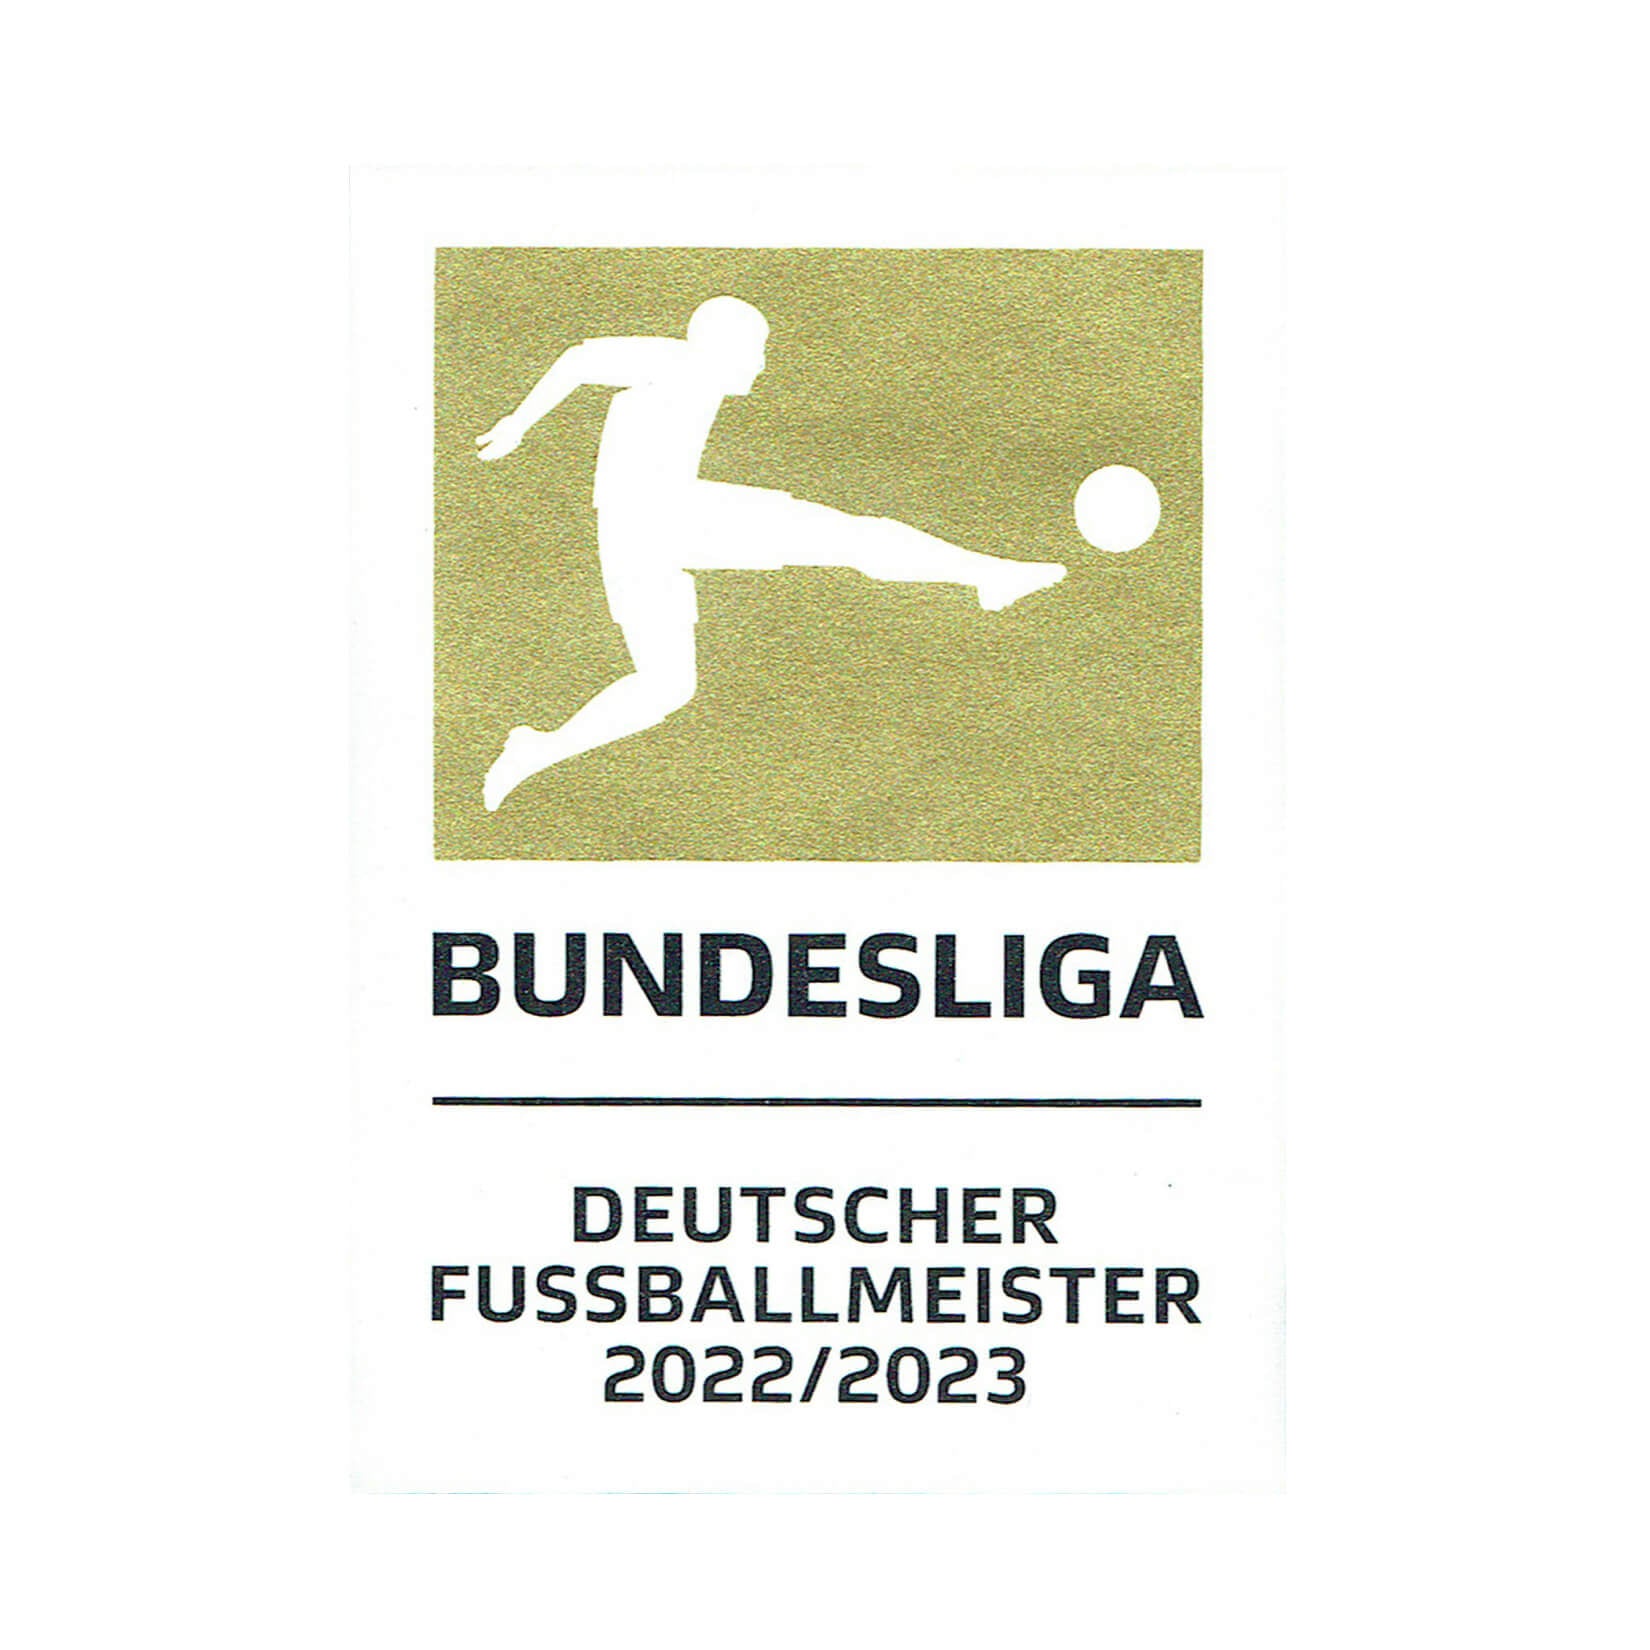 All the new Bundesliga jerseys for the 2022/23 season